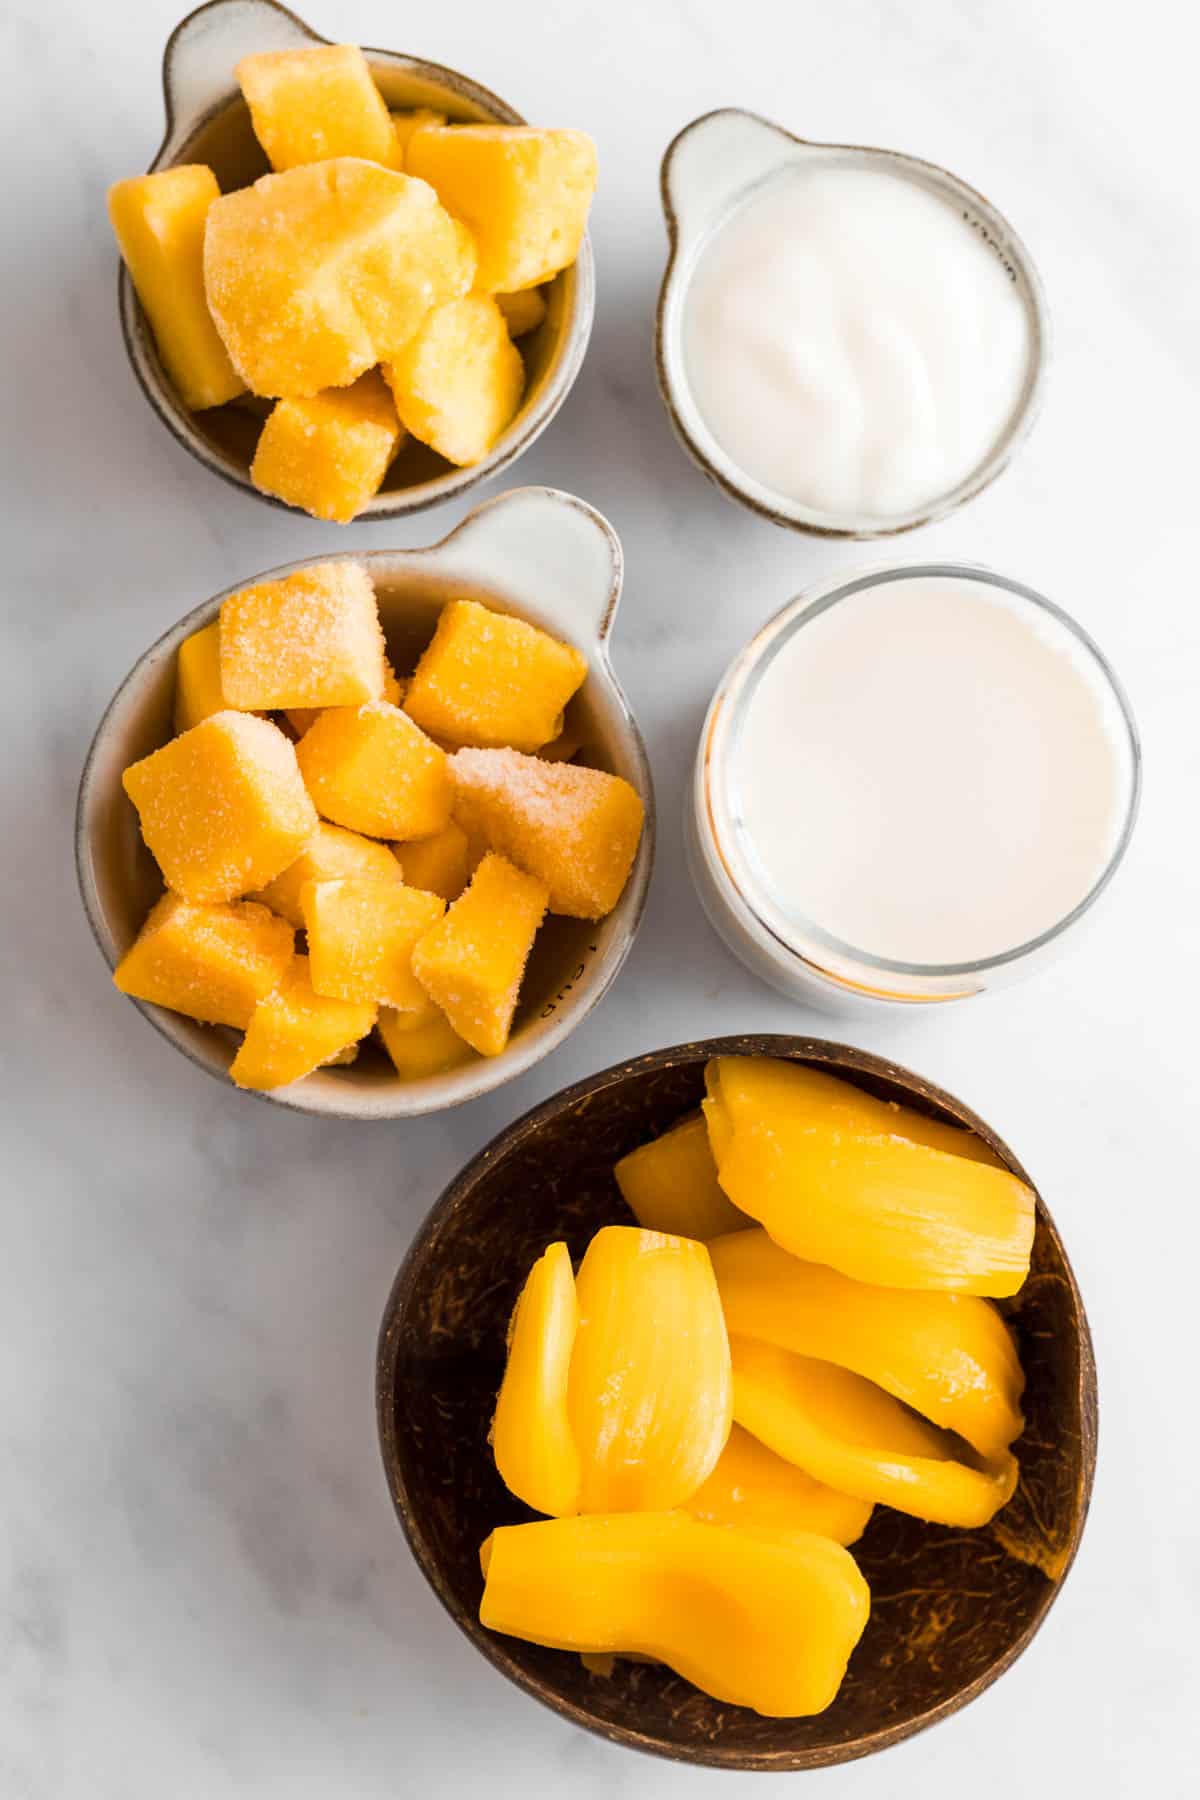 Pineapple, mango, jackfruit, yogurt, and milk.